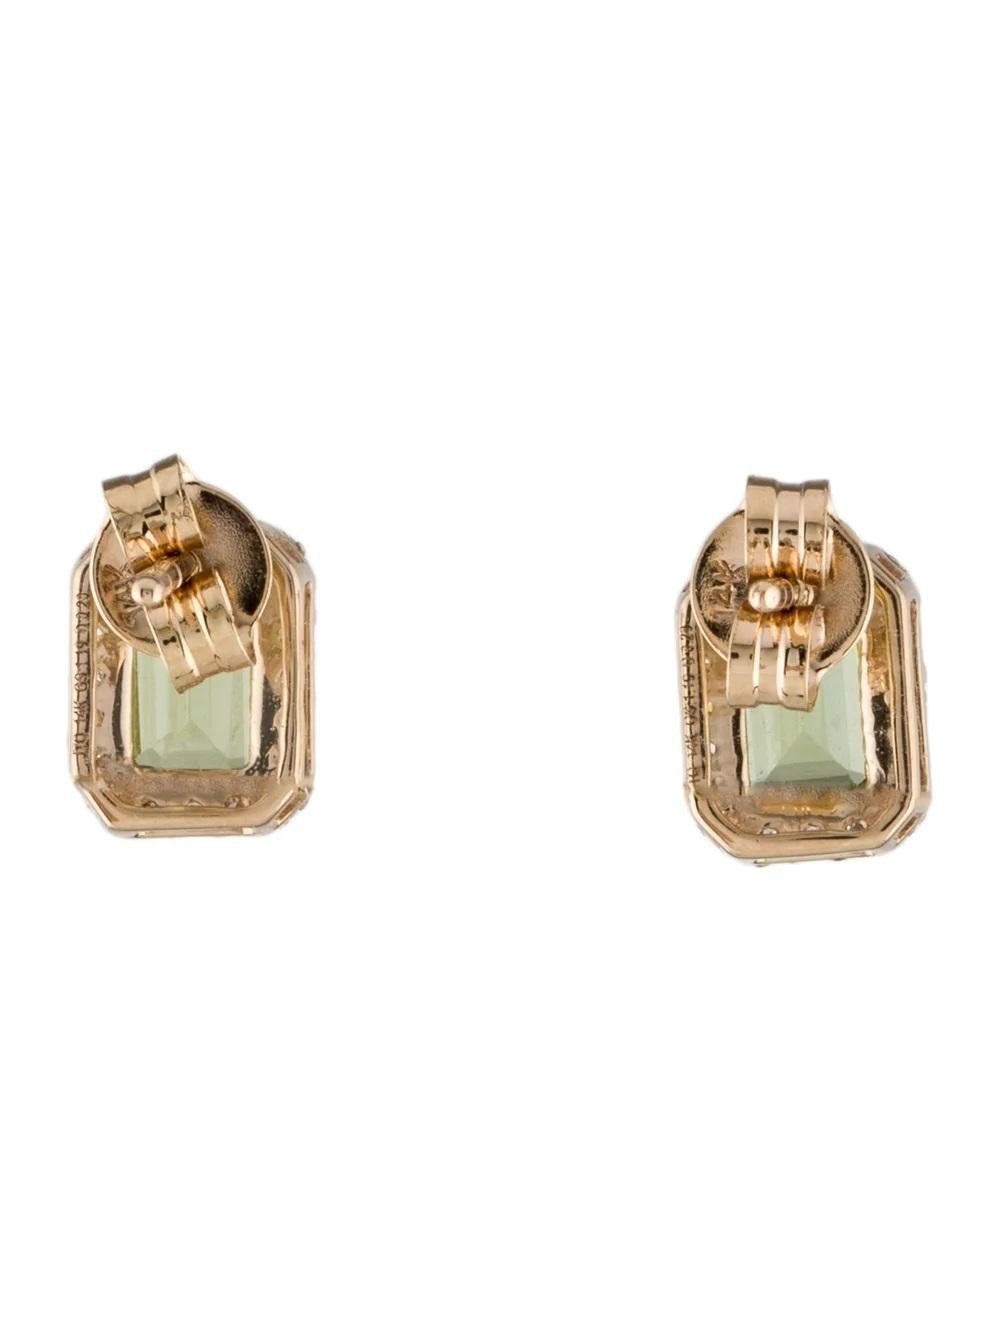 Emerald Cut 14K Peridot & Diamond Stud Earrings, 1.19ctw - Green Gemstone, Timeless Design